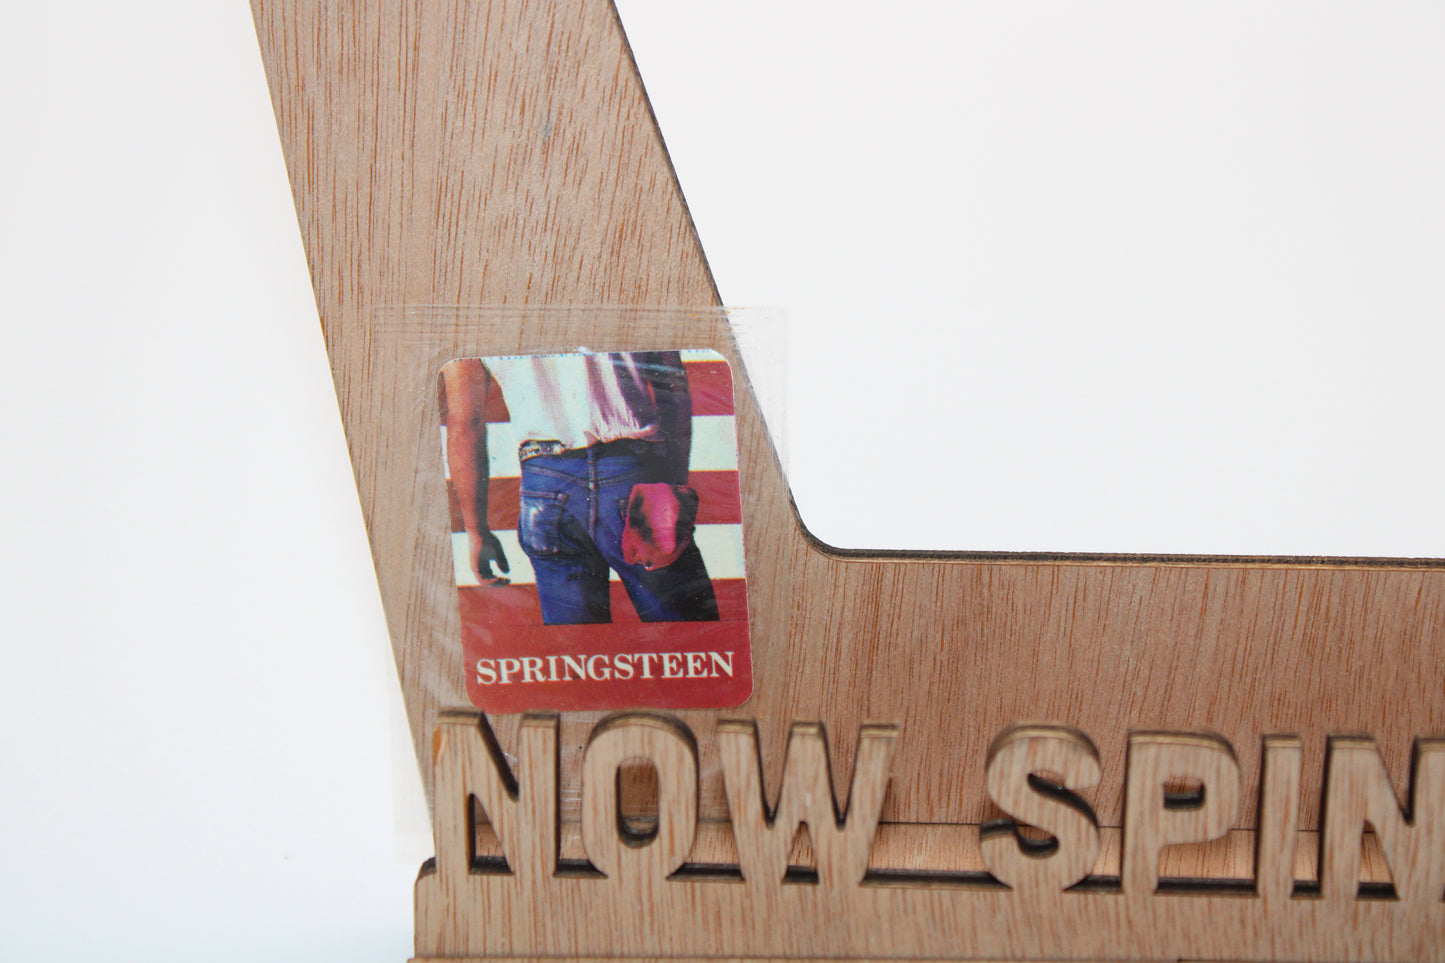 Bruce Springsteen Original "Hostess" Giveaway Sticker - Sealed 1984 - One of a Kind